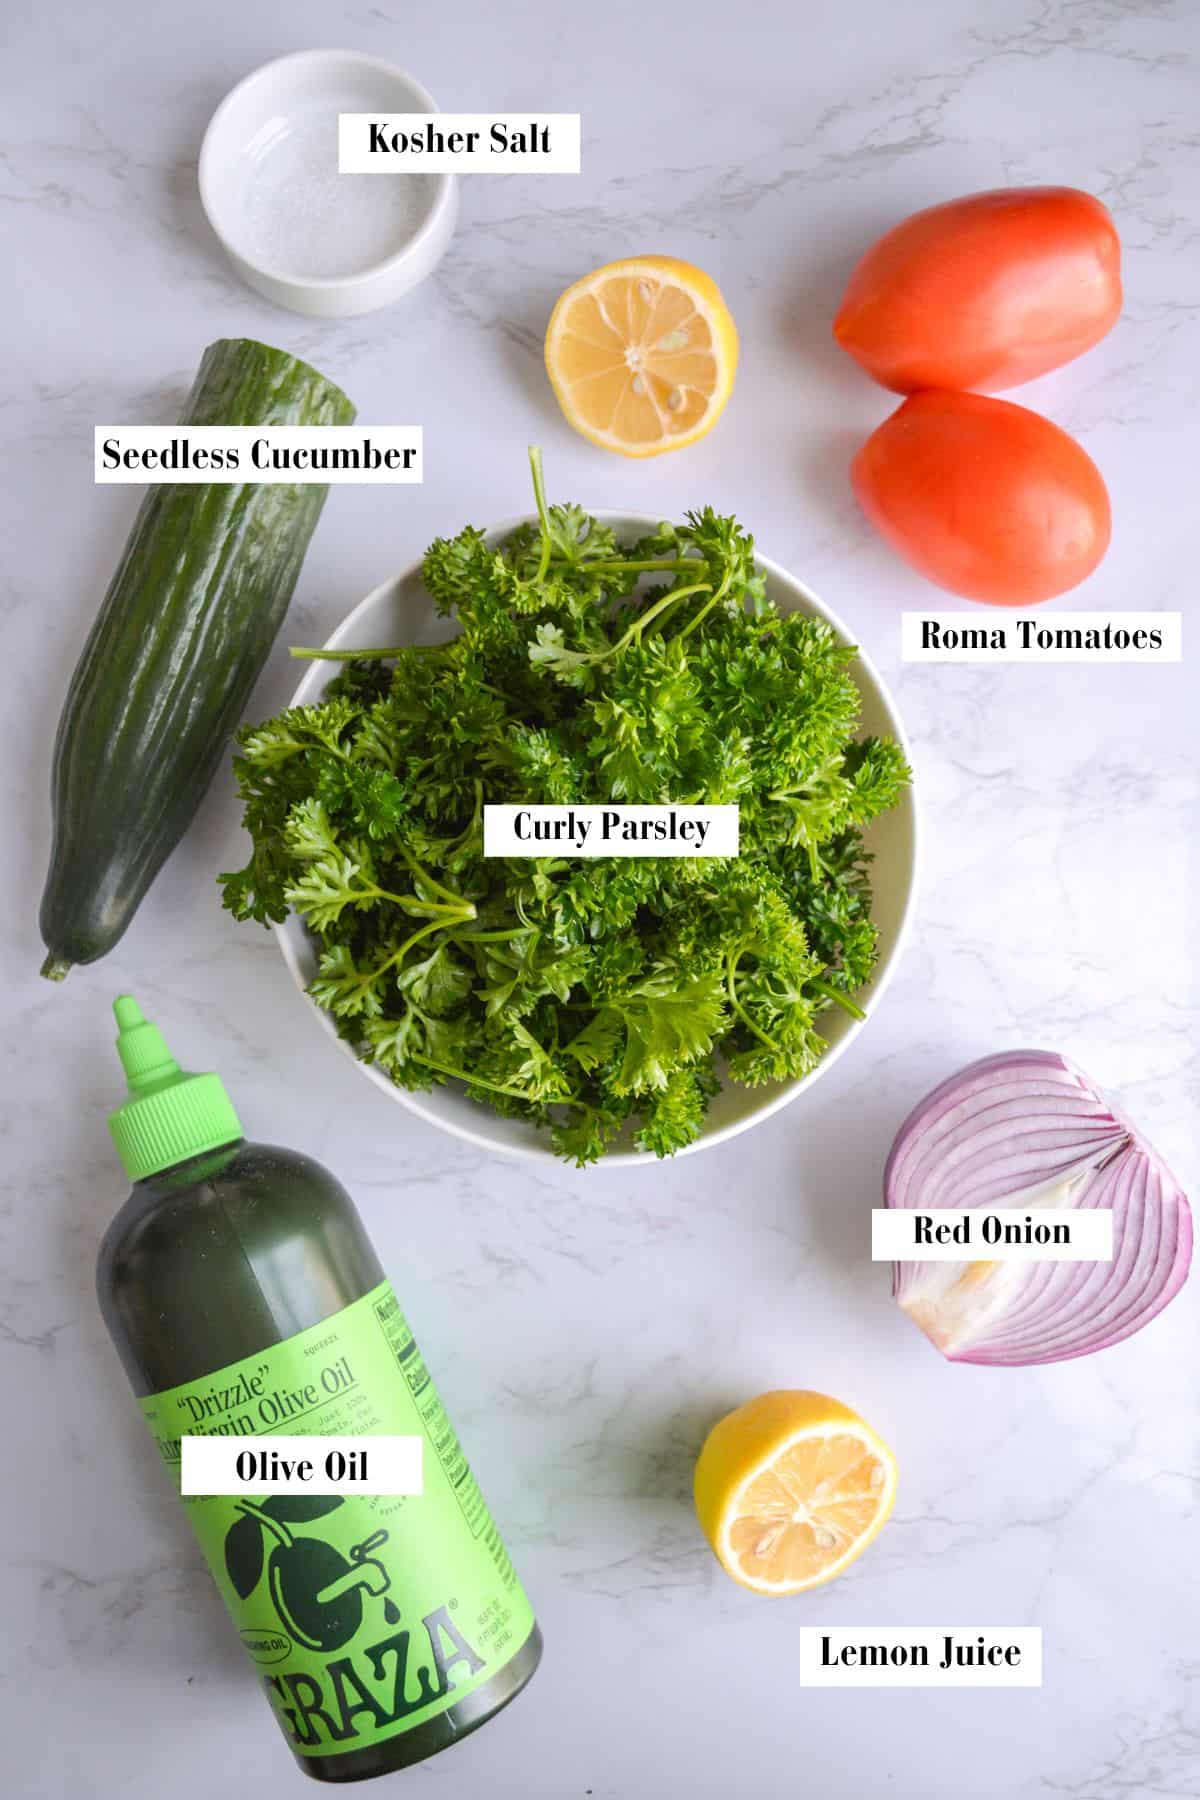 Ingredients for making this grain-free tabbouleh salad recipe.